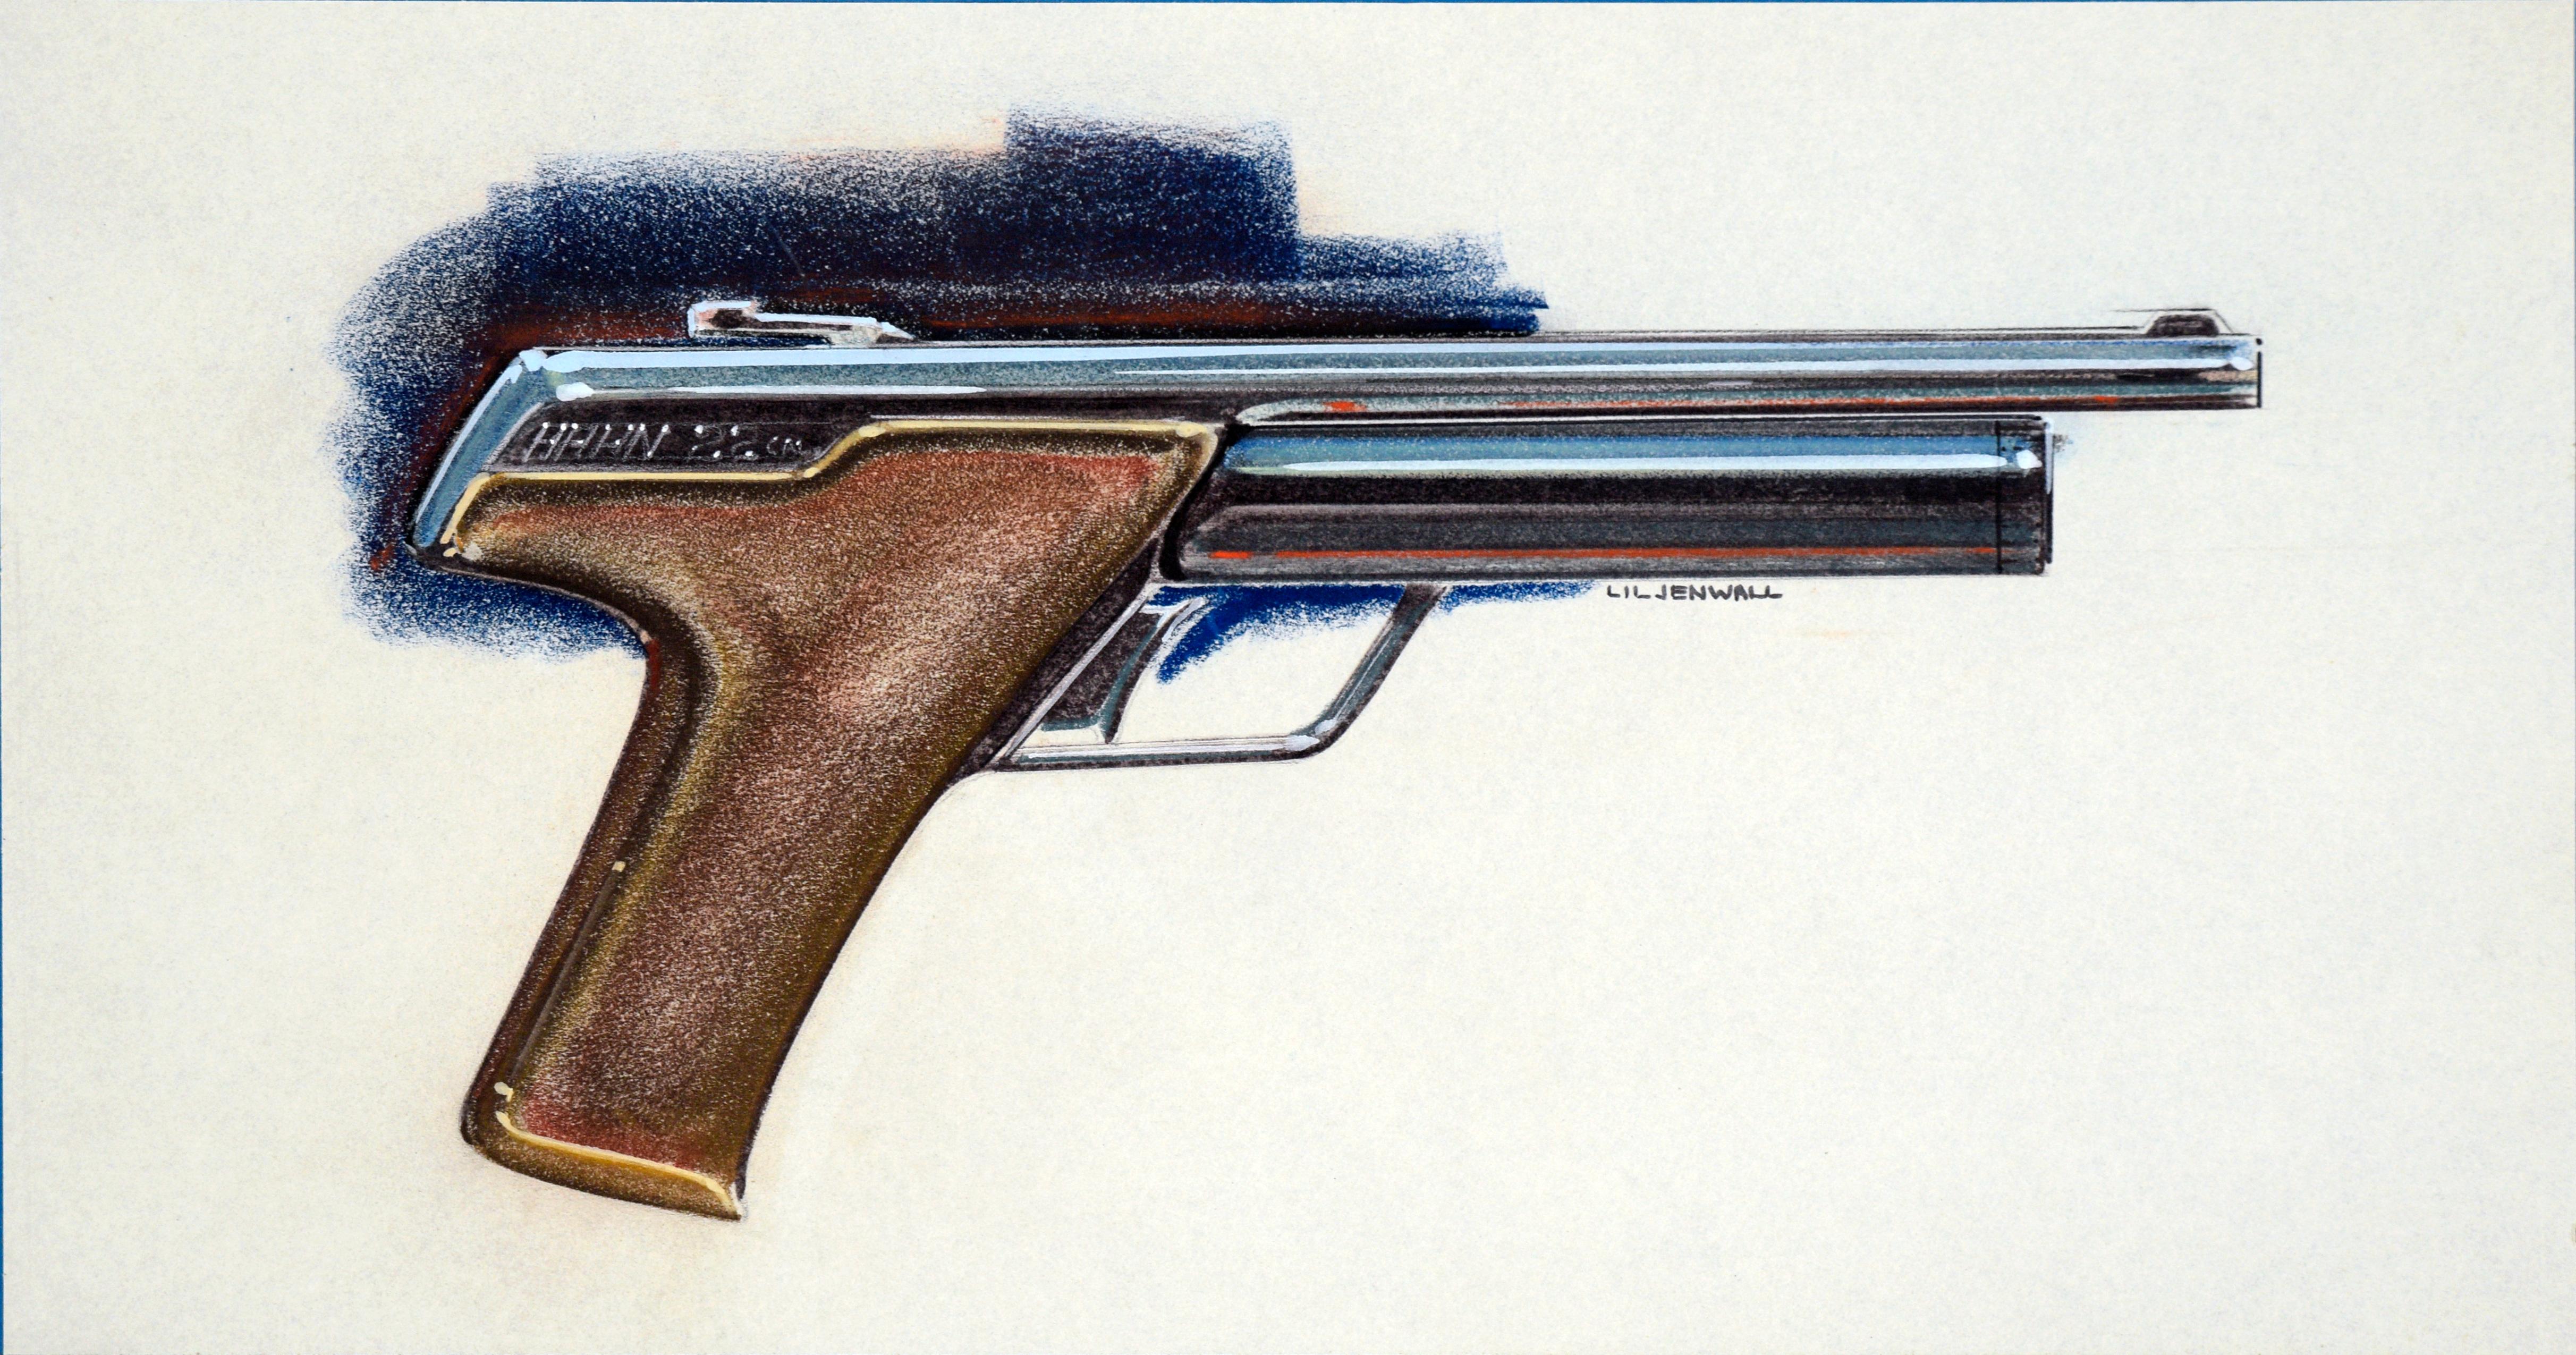 Hahn Air Pistol Design Drawings Pencil - Ink on Paper Designer HP35 calculator - Art by Edward T. Liljenwall